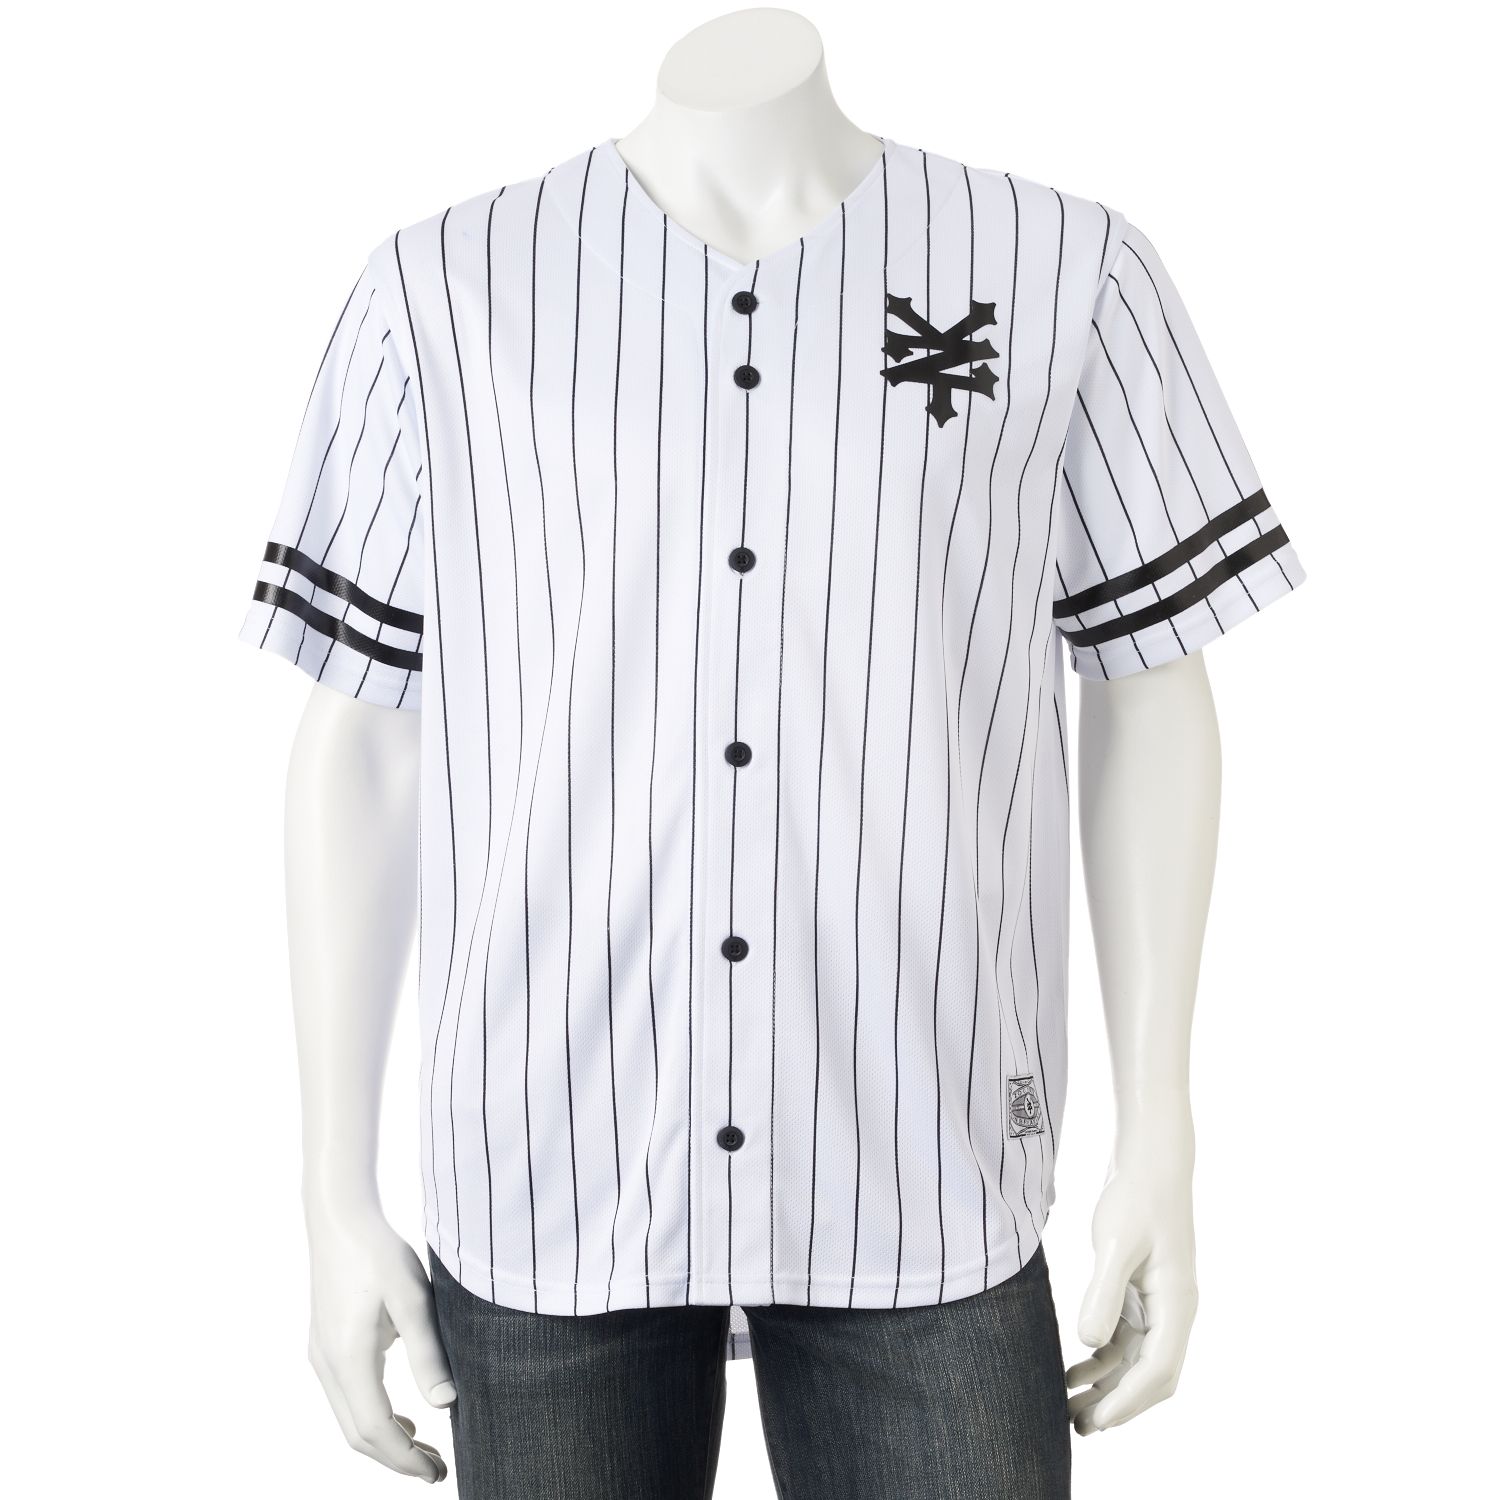 zoo york baseball jersey